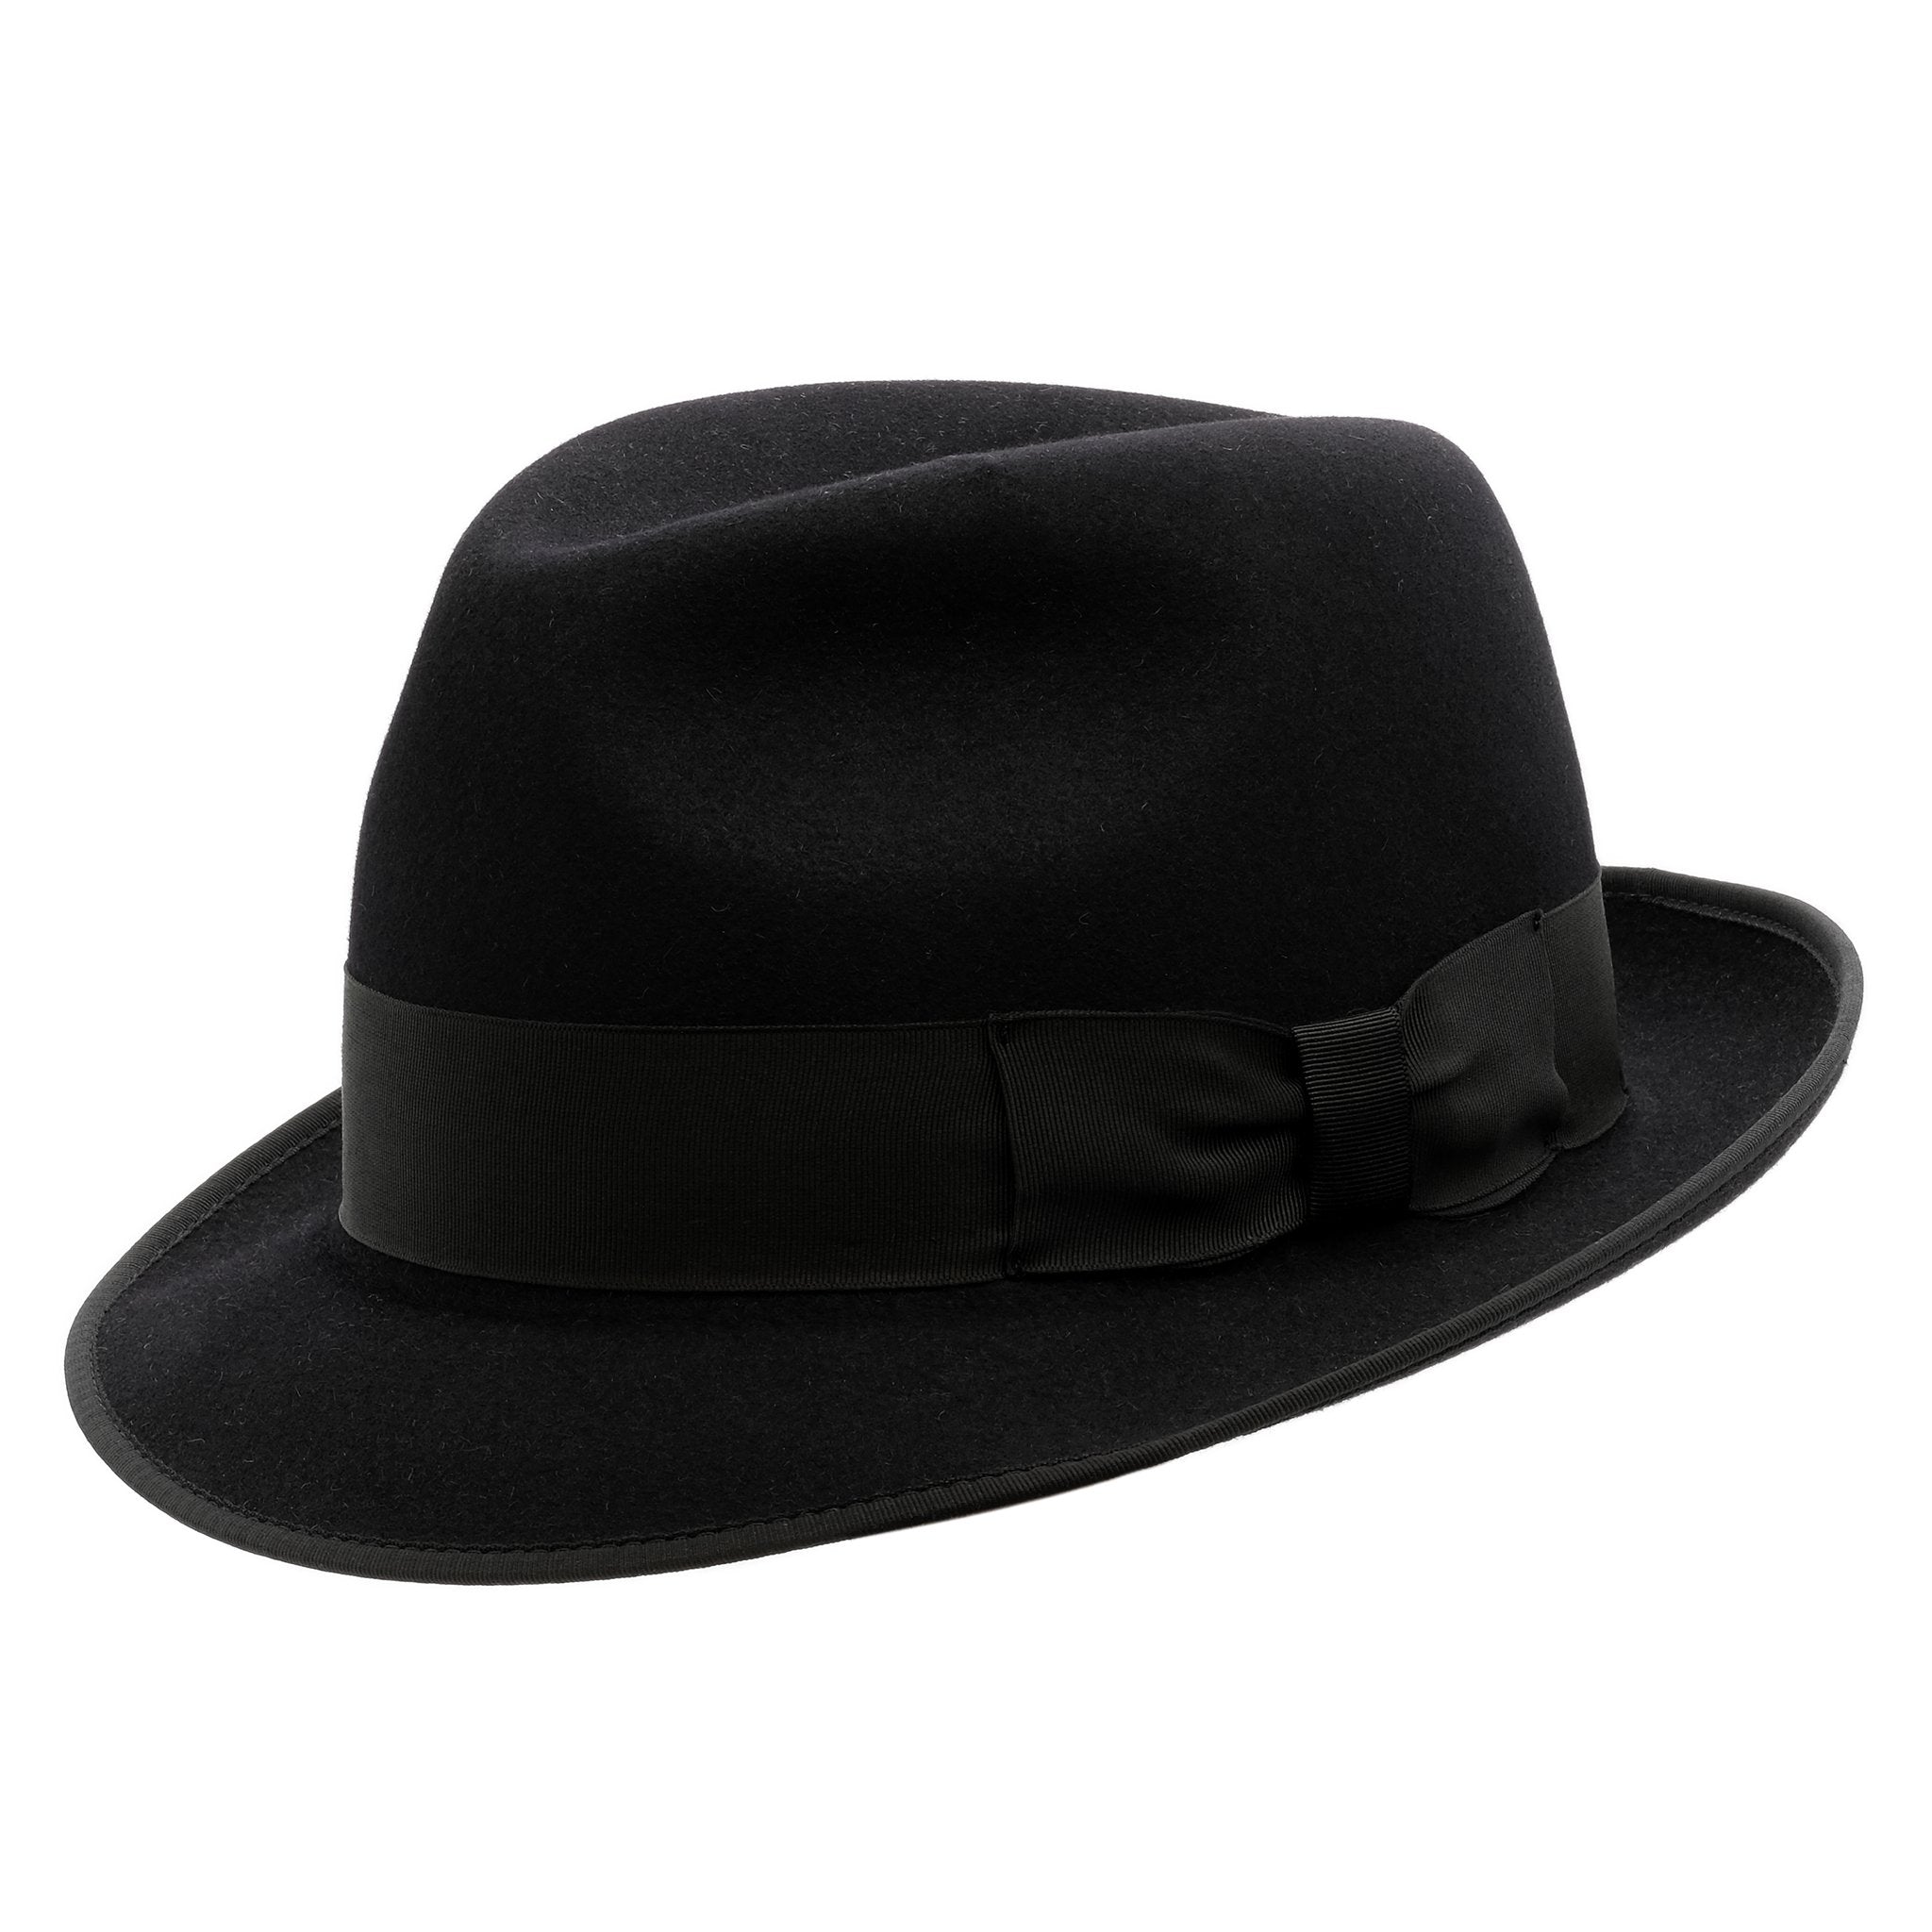 Angle view of the Akubra Hampton hat in black